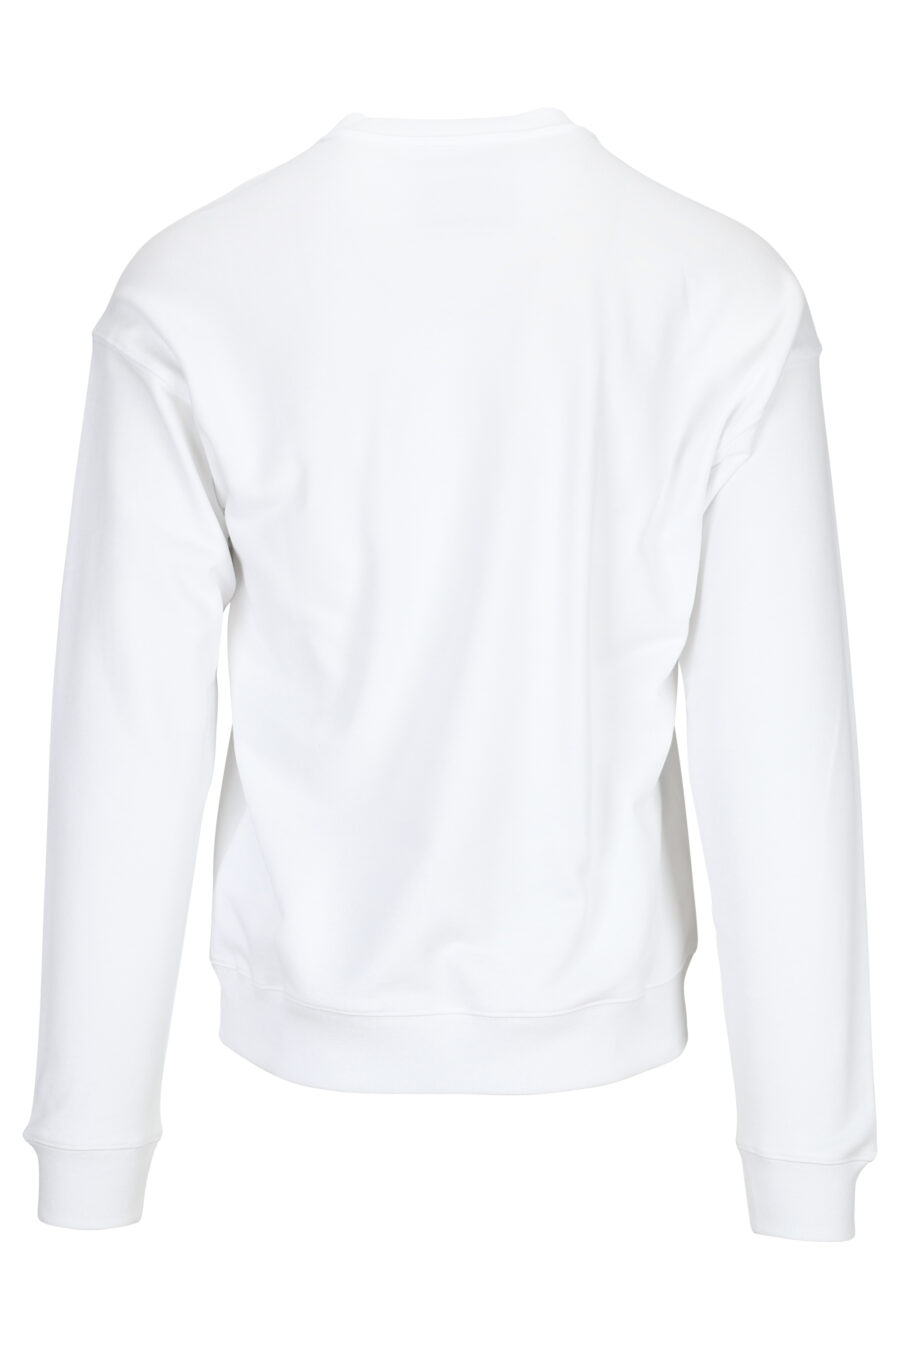 Weißes Sweatshirt mit schwarzem Maxilogo - 889316943894 1